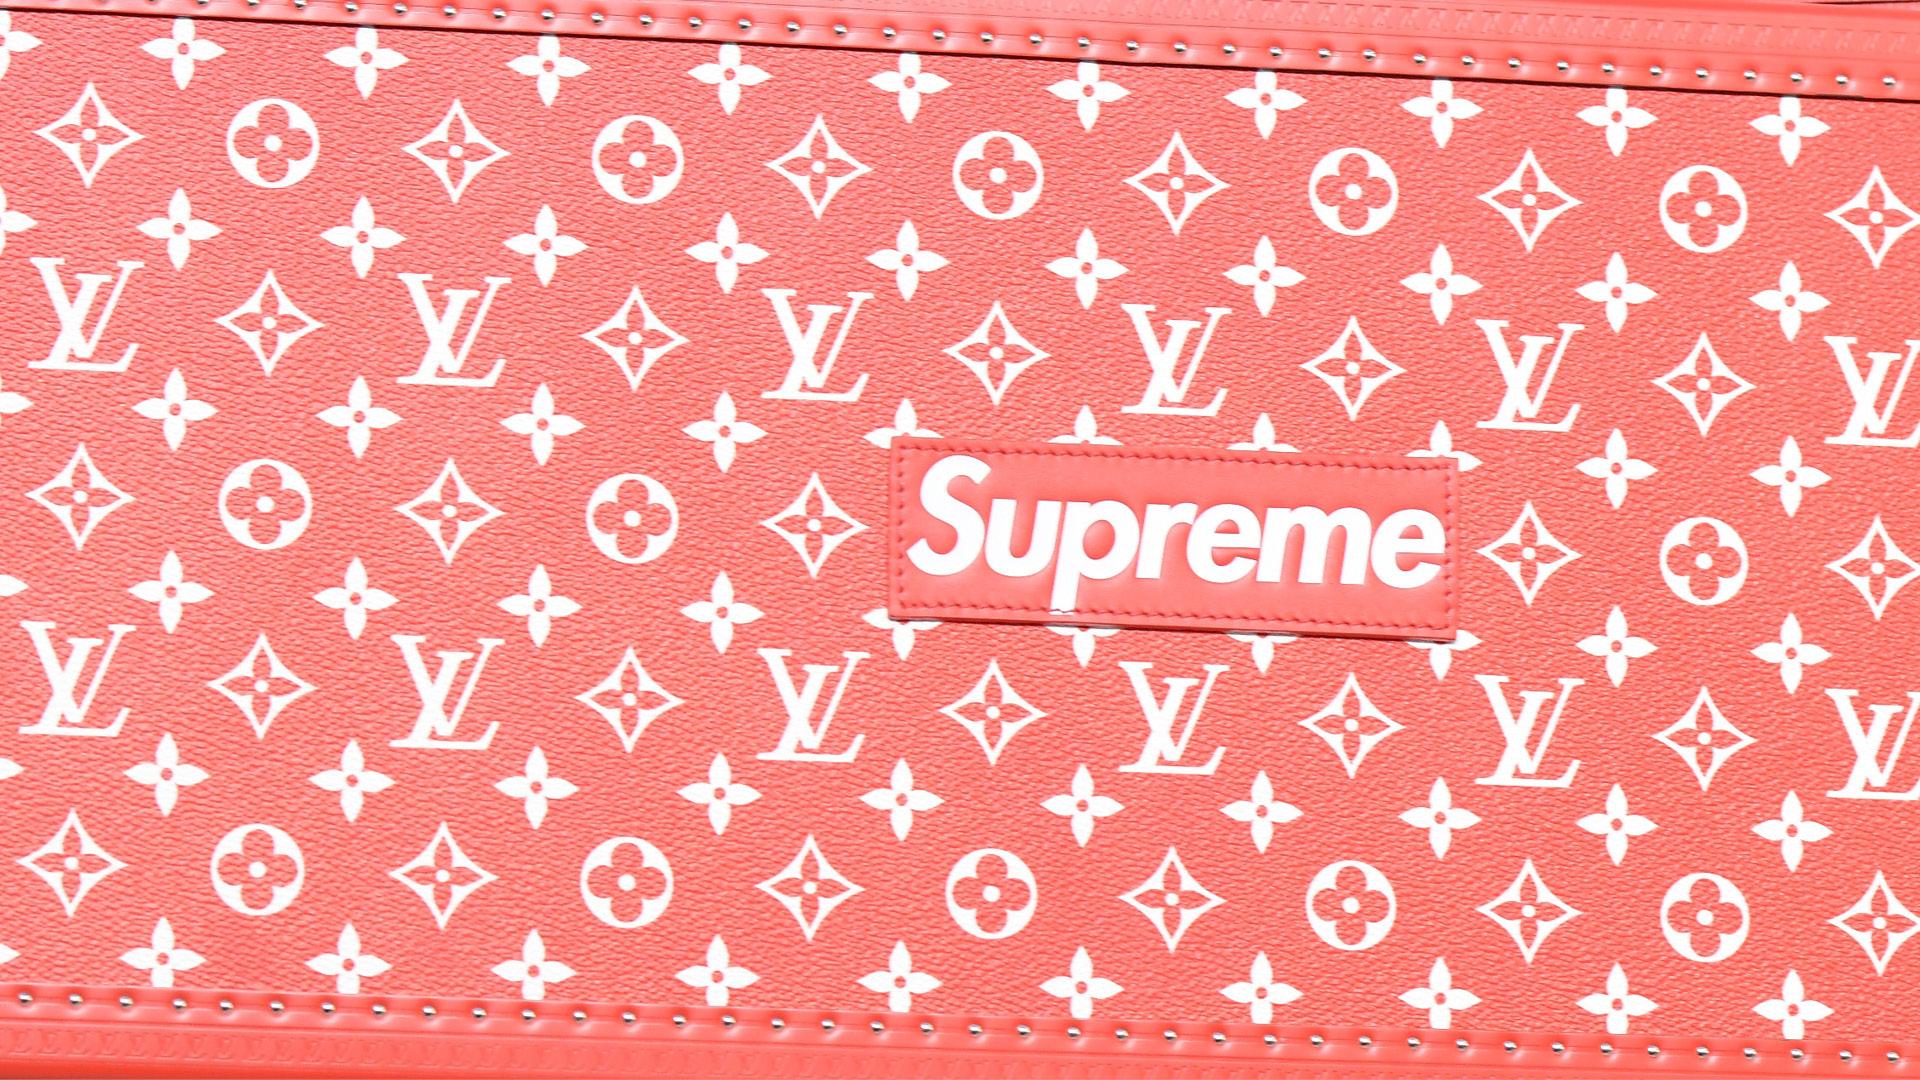 DropsByJay on X: Supreme x Louis Vuitton More & More Pieces